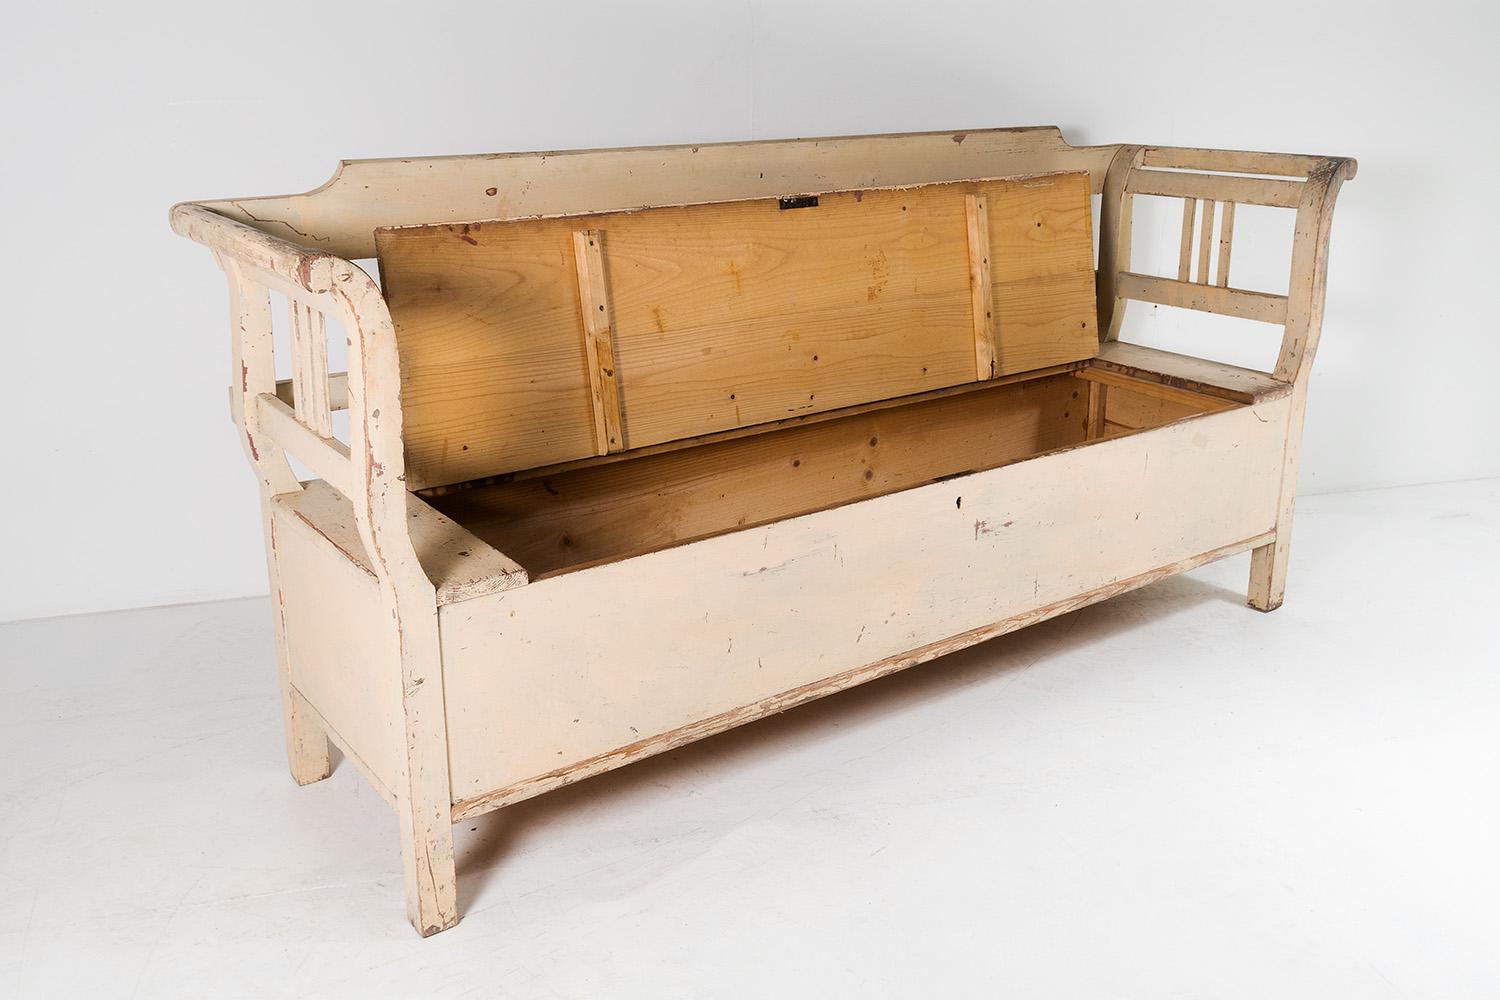 Shaker Original Painted Pine European Box Settle Farmhouse Bench Seat with Storage